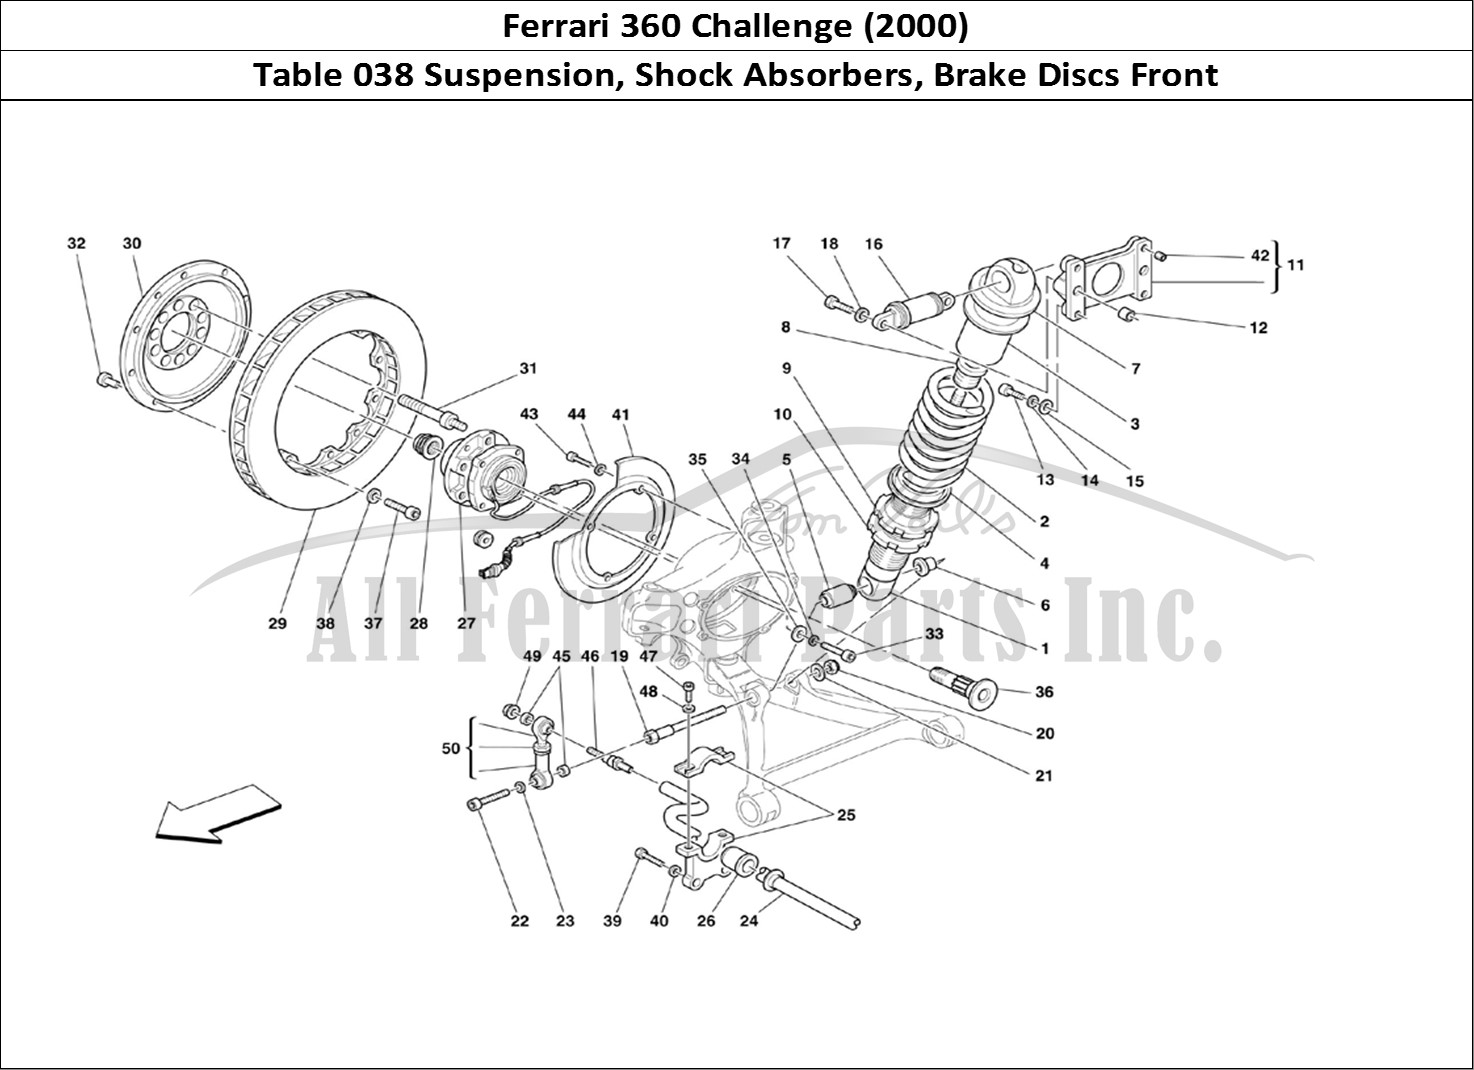 Ferrari Parts Ferrari 360 Challenge (2000) Page 038 Front Suspension - Shock